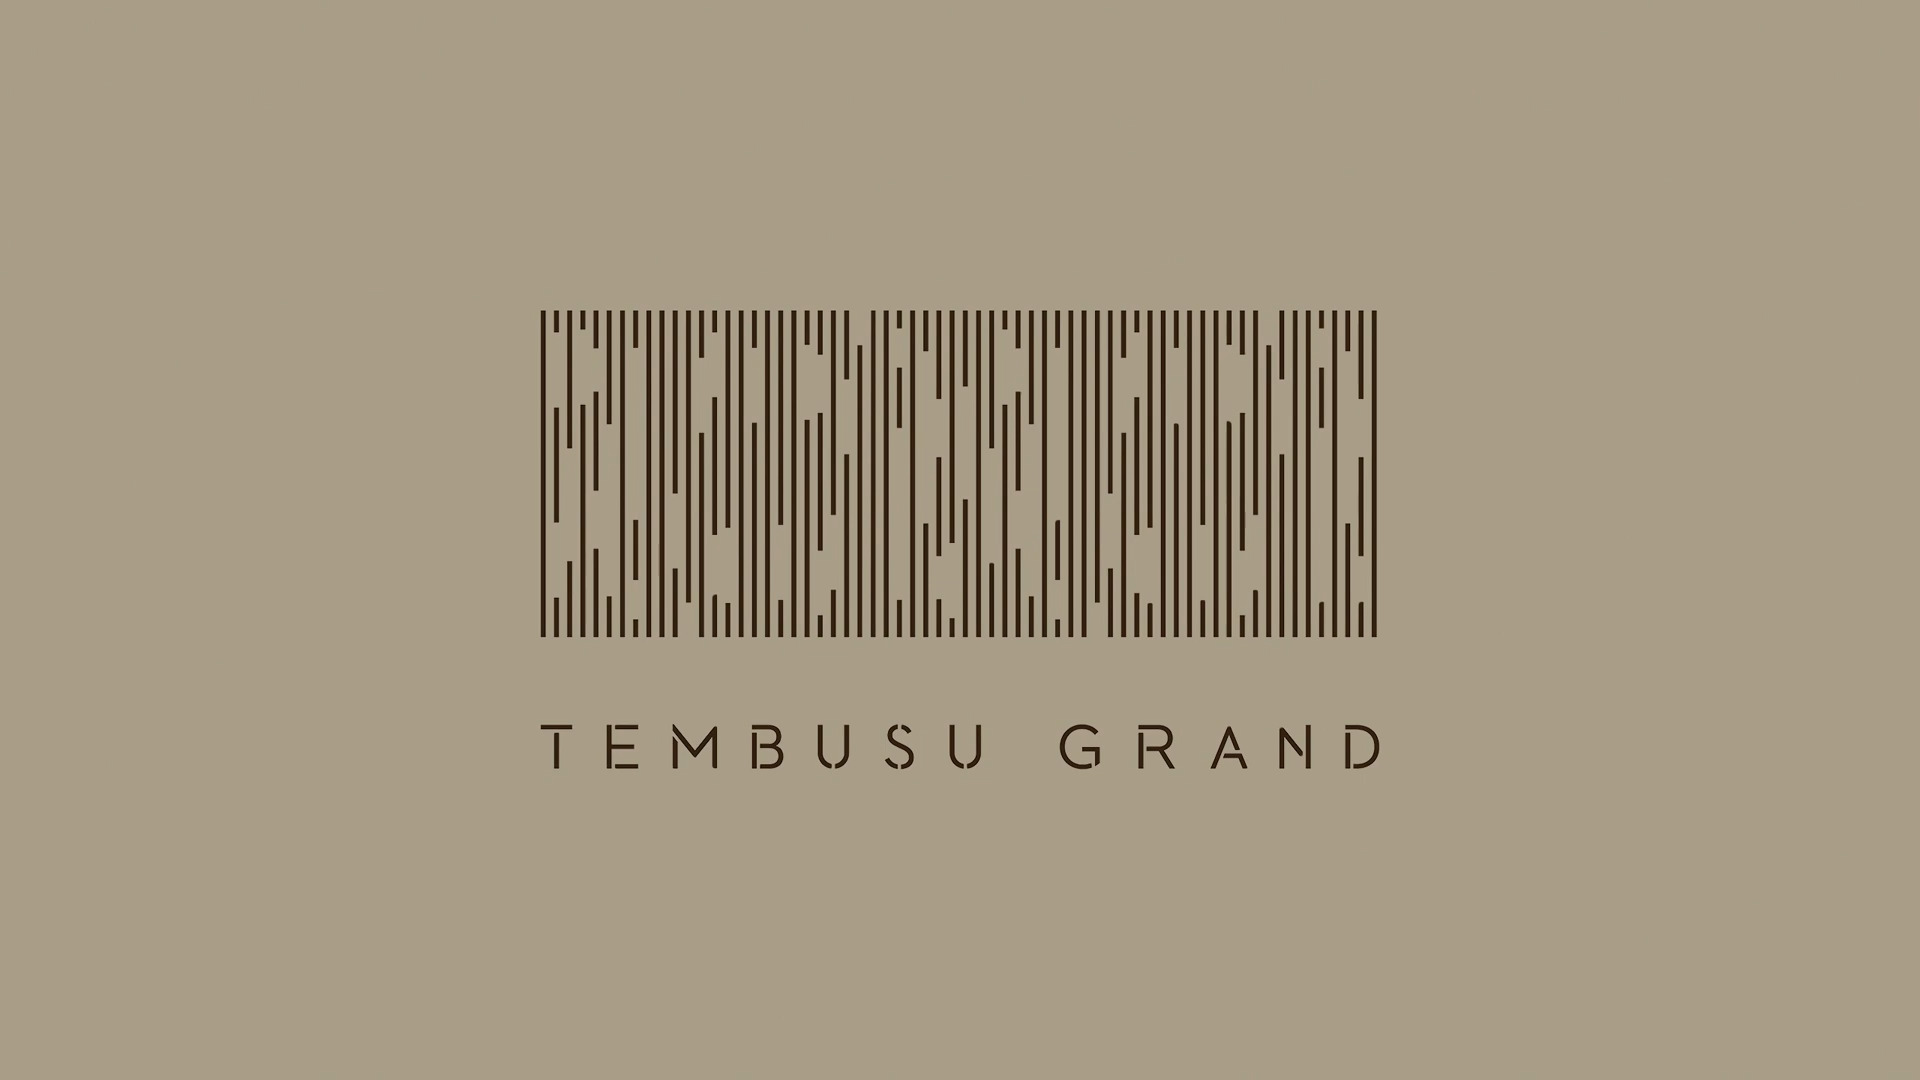 Tembusu Grand Fly Through Video